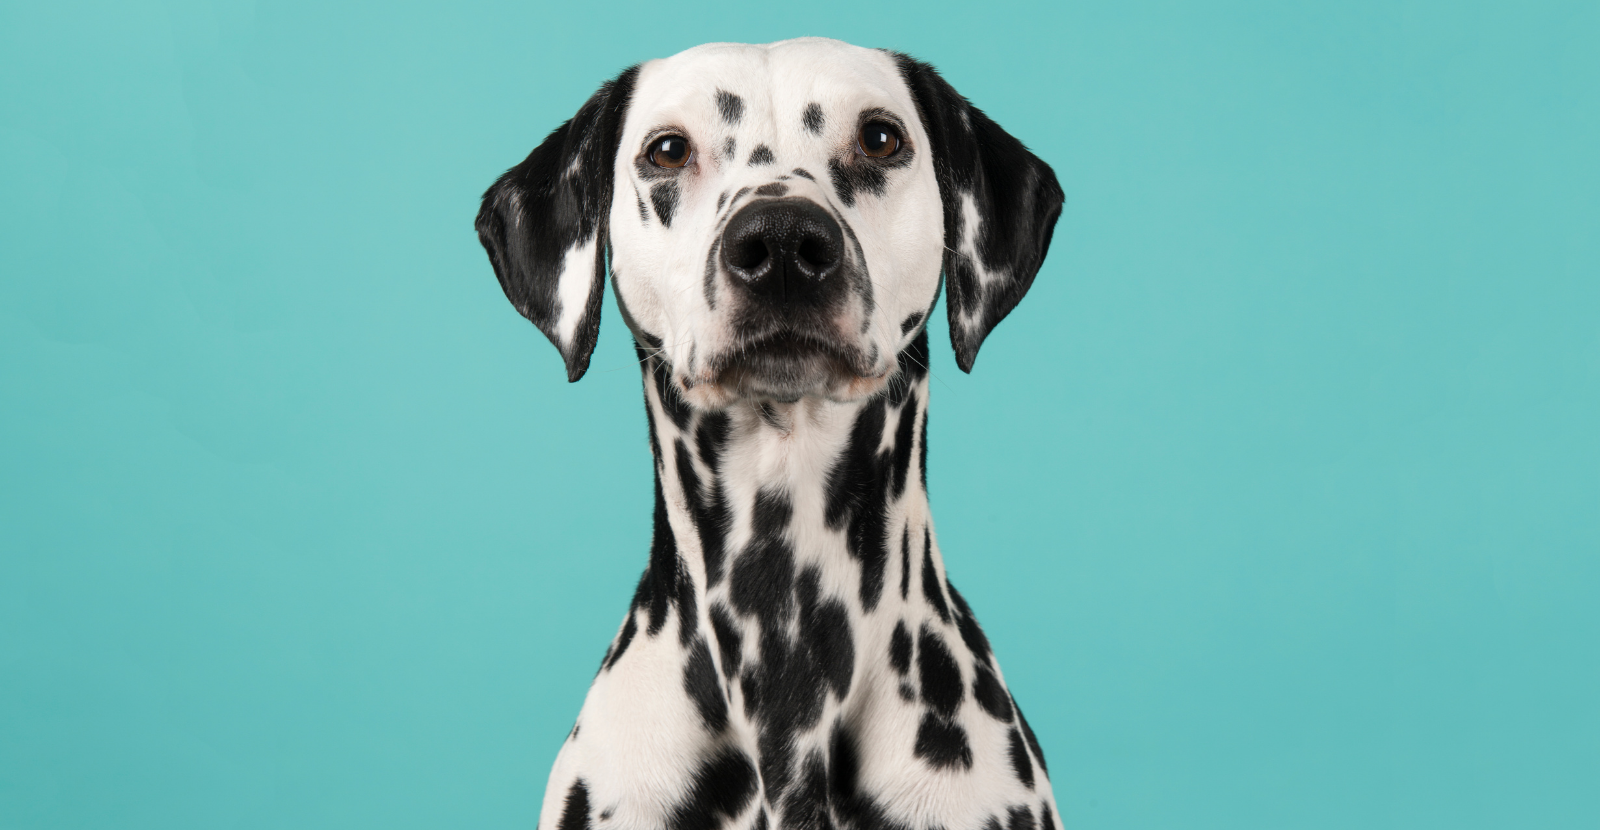 Dalmatians are Smart, Agile & Outgoing Fire Dogs